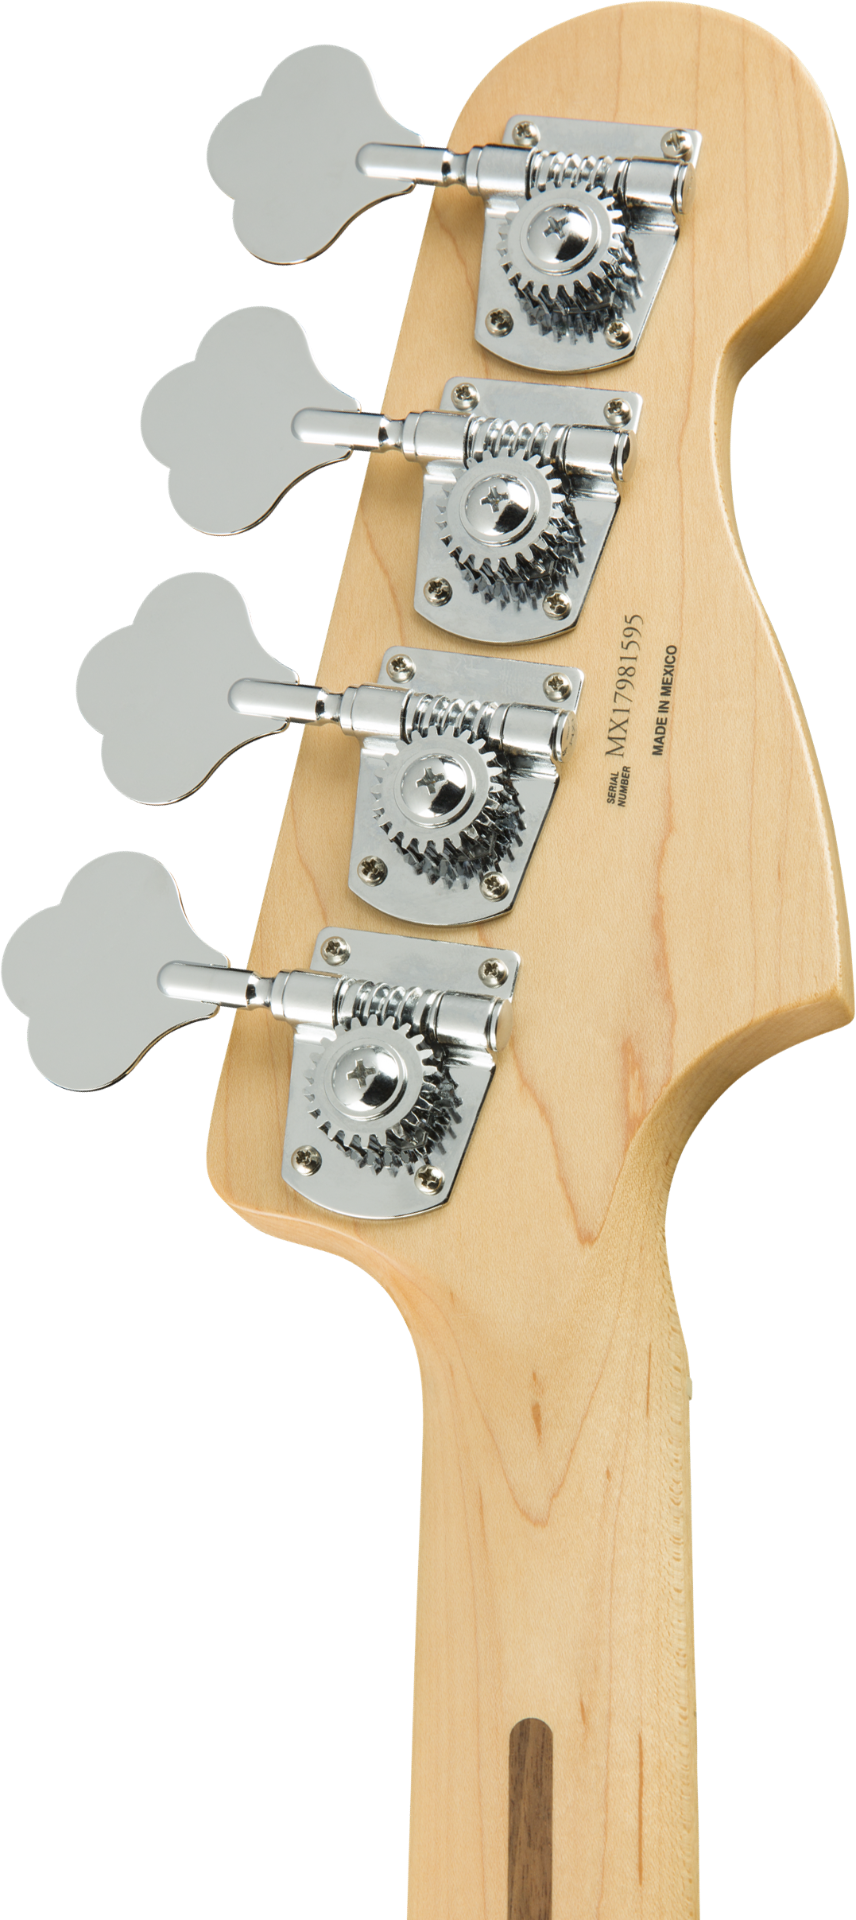 Fender Player Jazz Electric Bass Guitar - Maple LH Fingerboard - Polar White